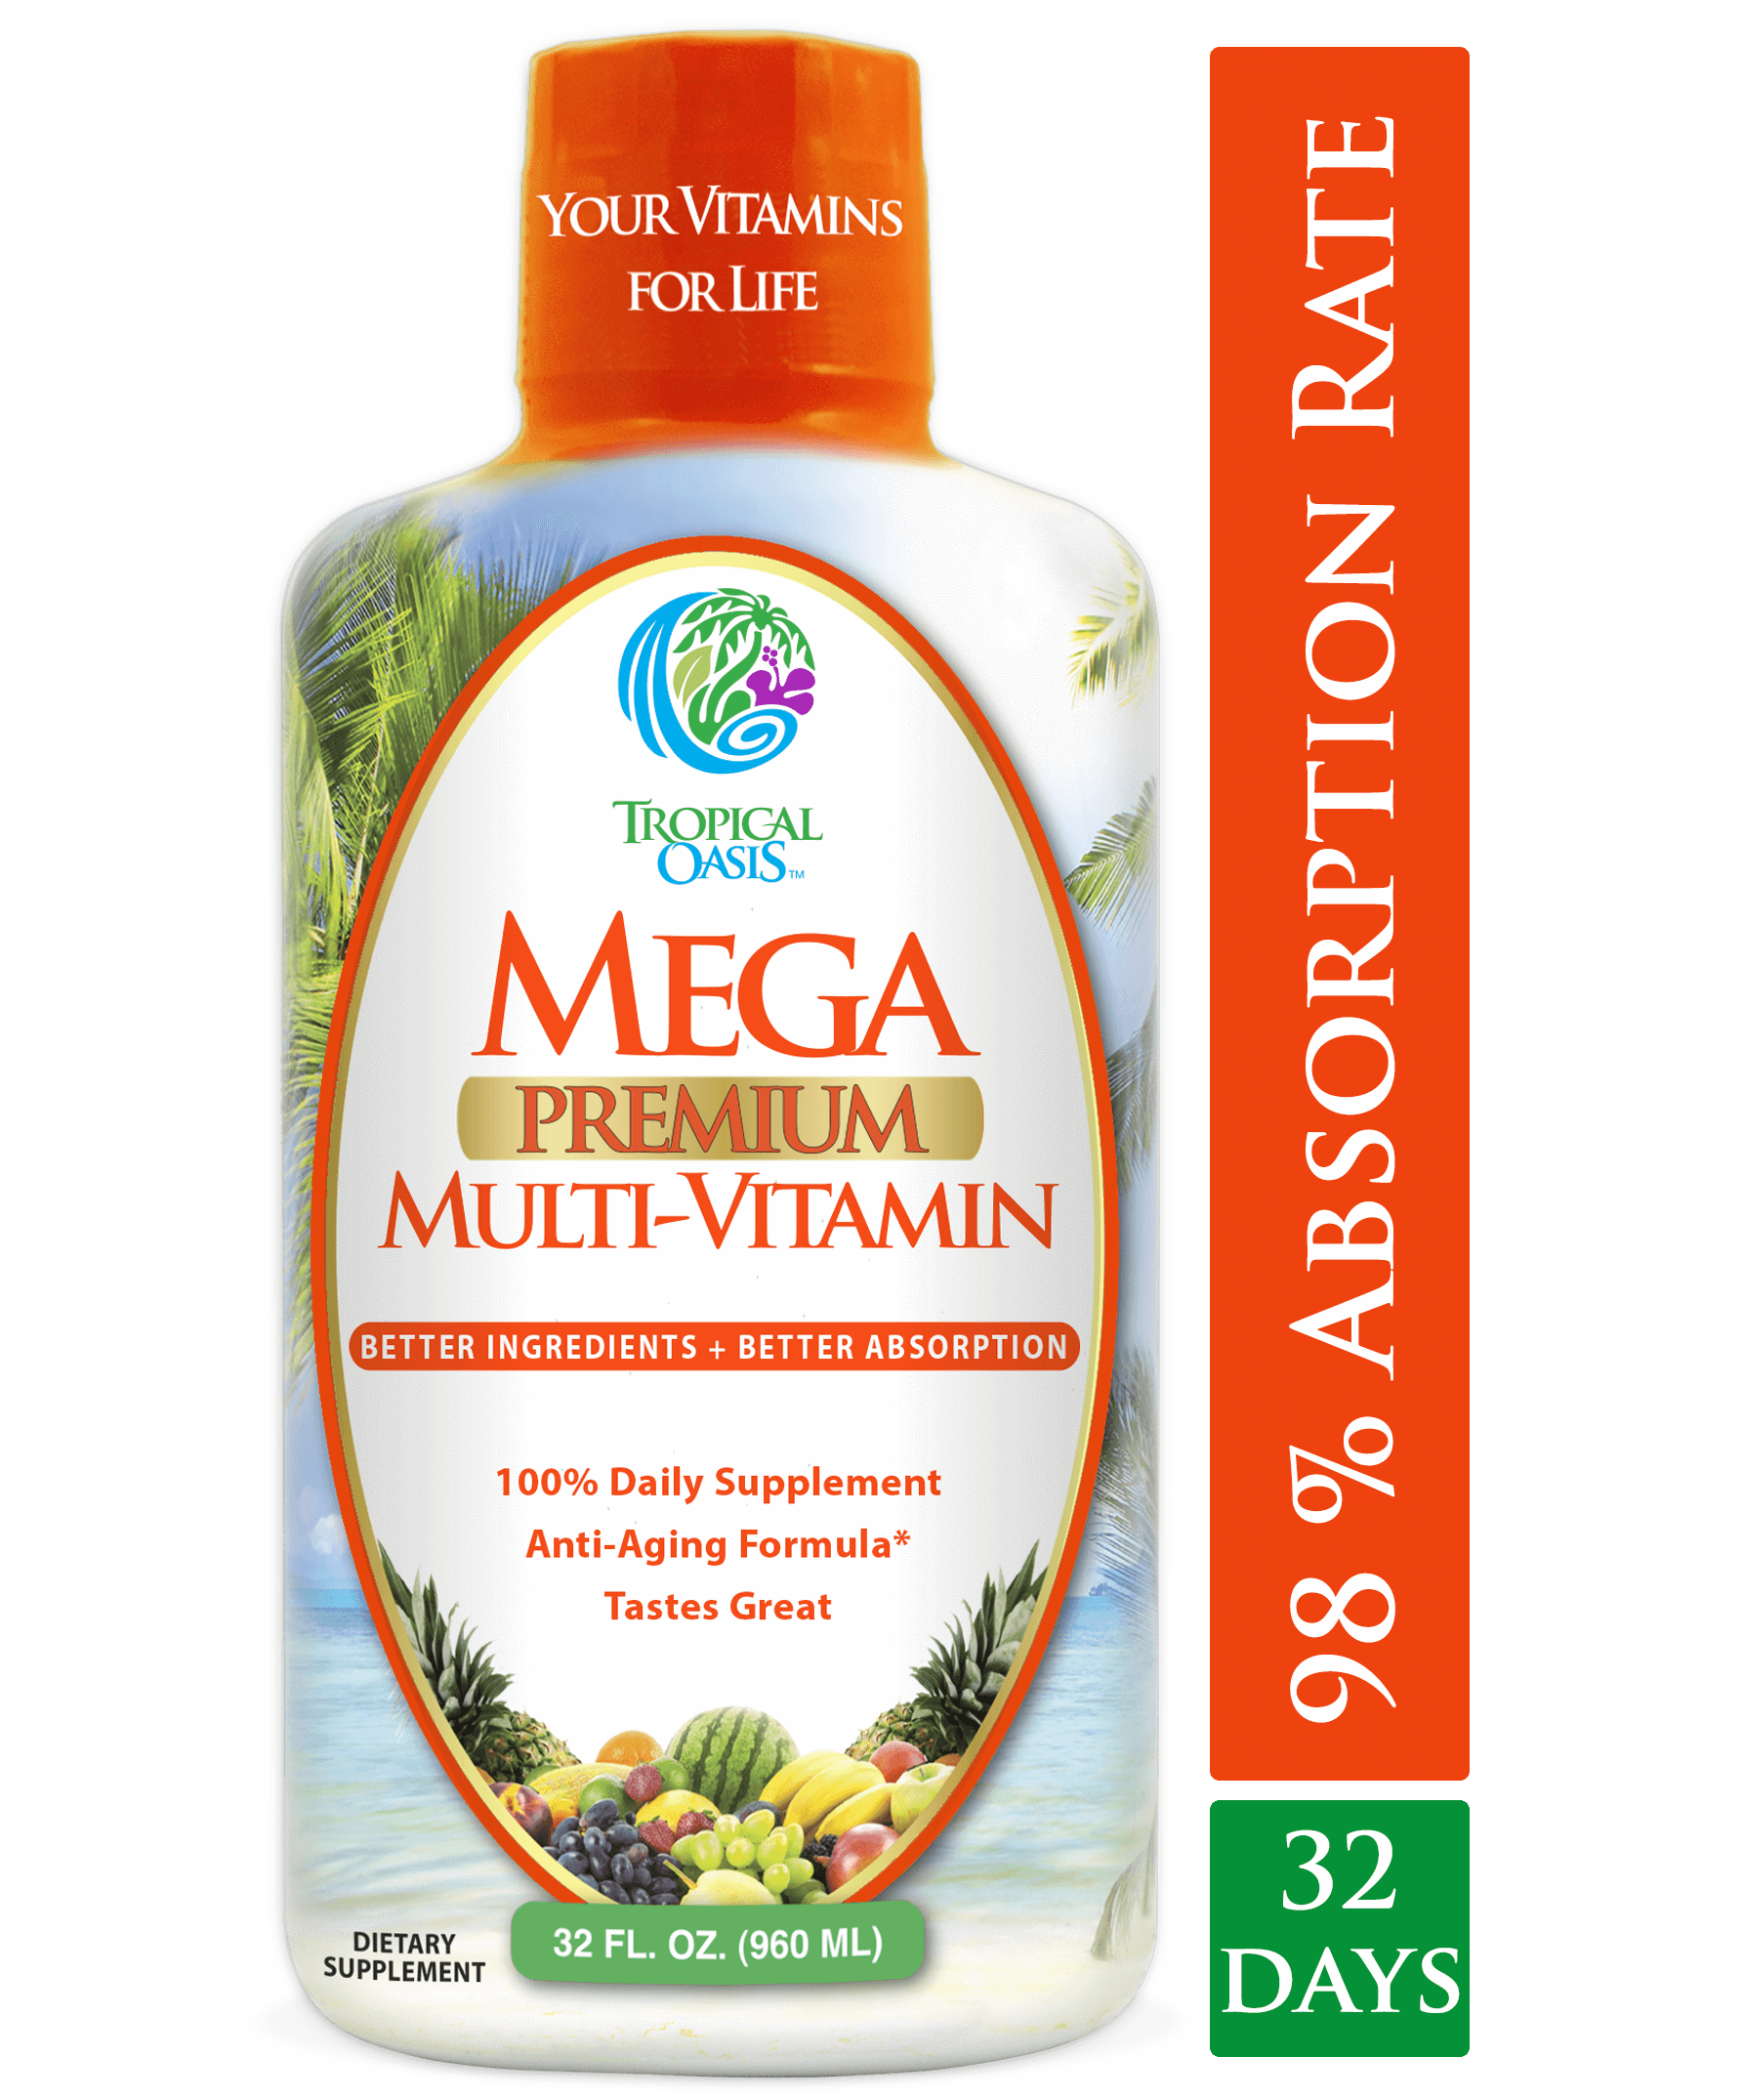 Mega-vitamin therapy - Pictures